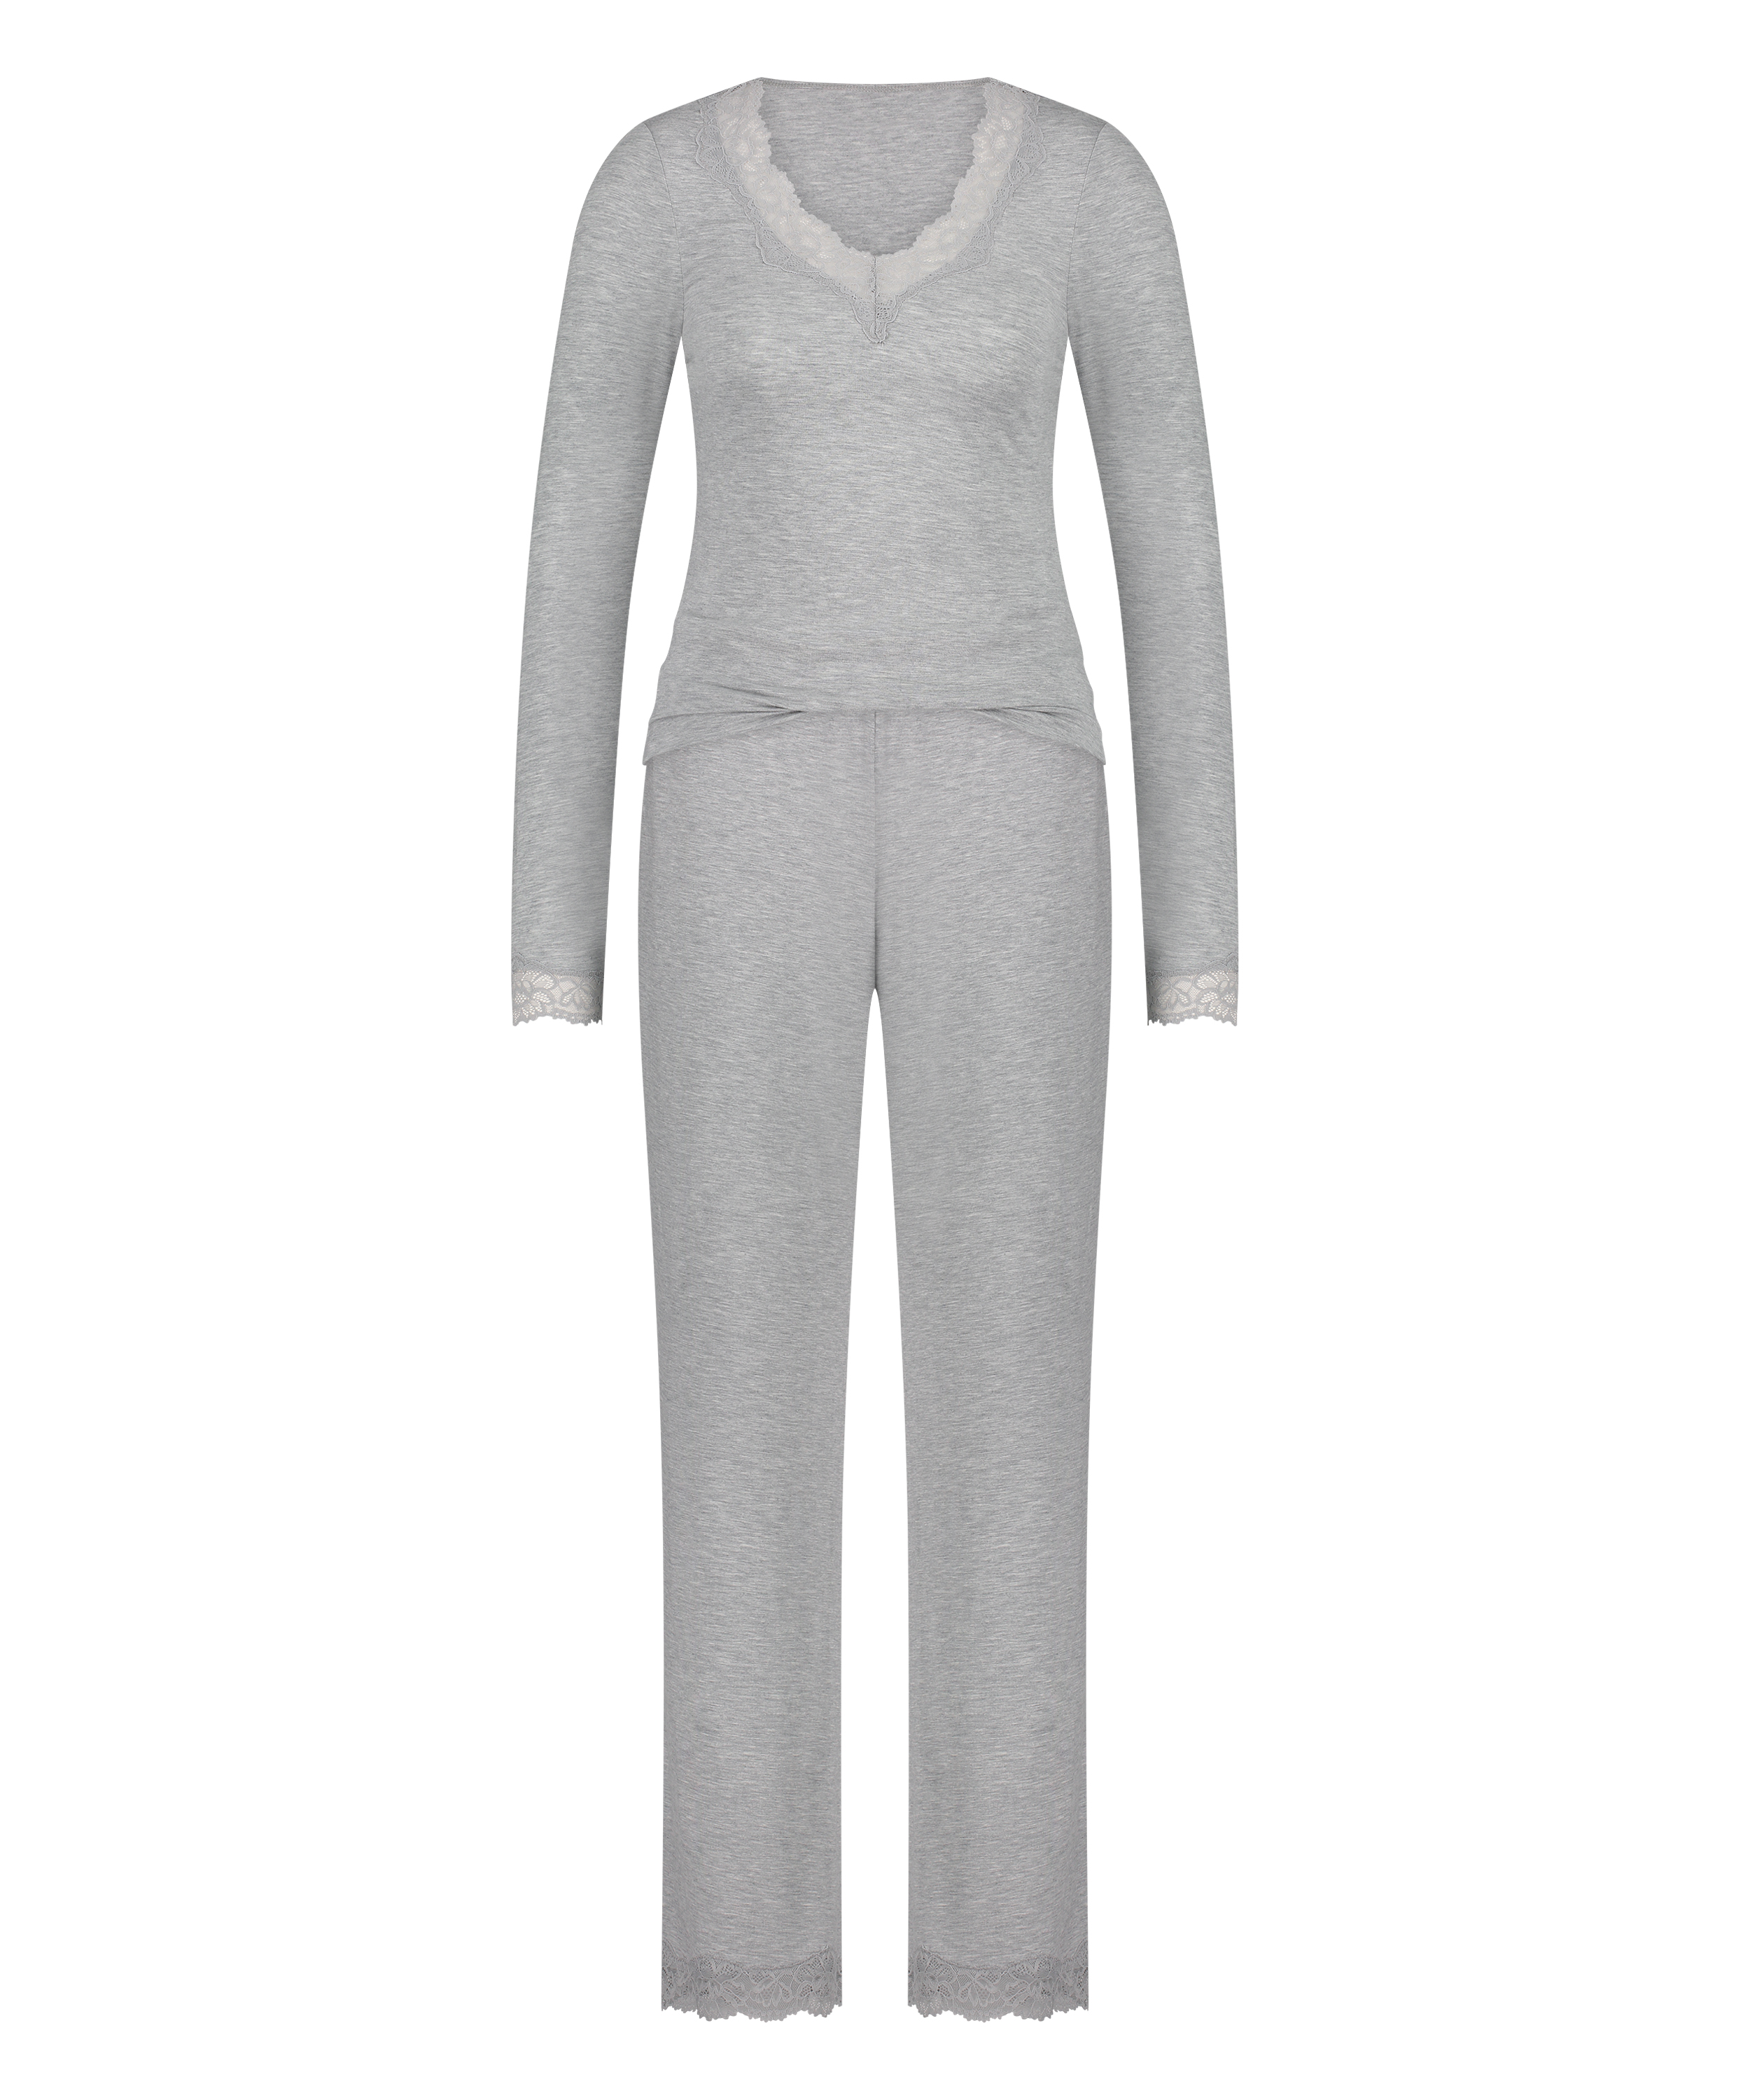 Long Sleeve Lace Pajama Set for €12.5 - Pajamas - Hunkemöller